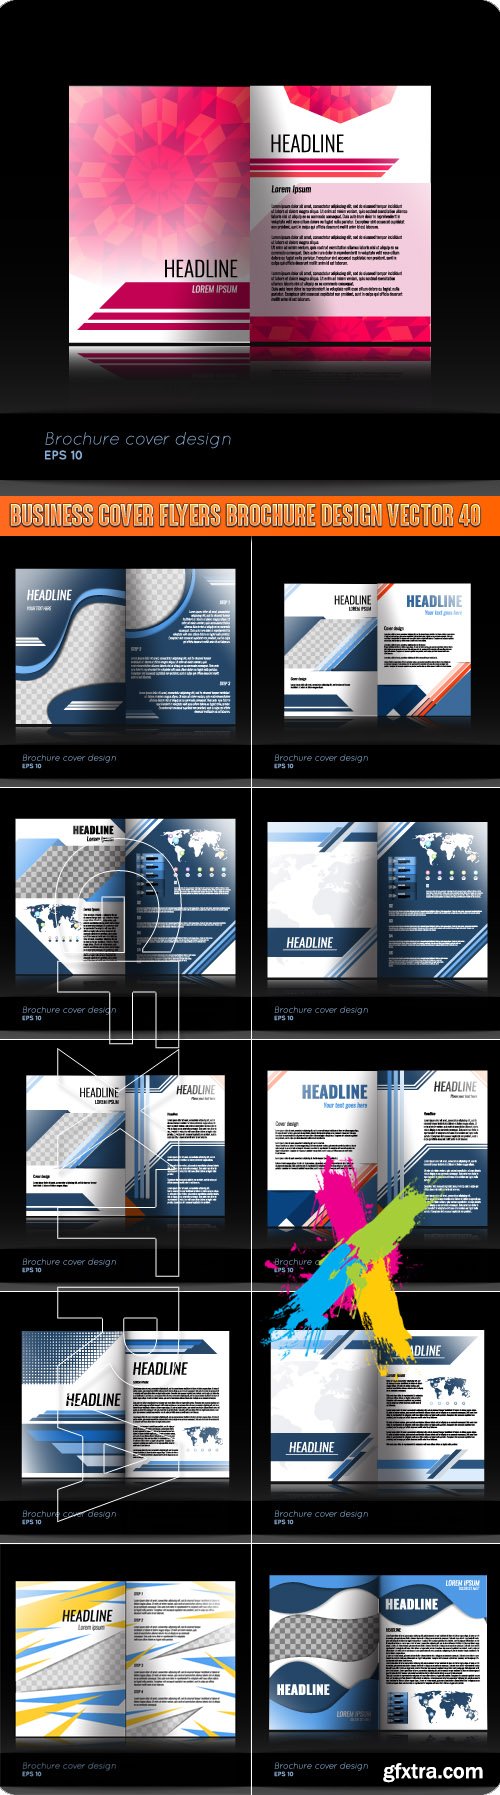 Business cover flyers brochure design vector 40